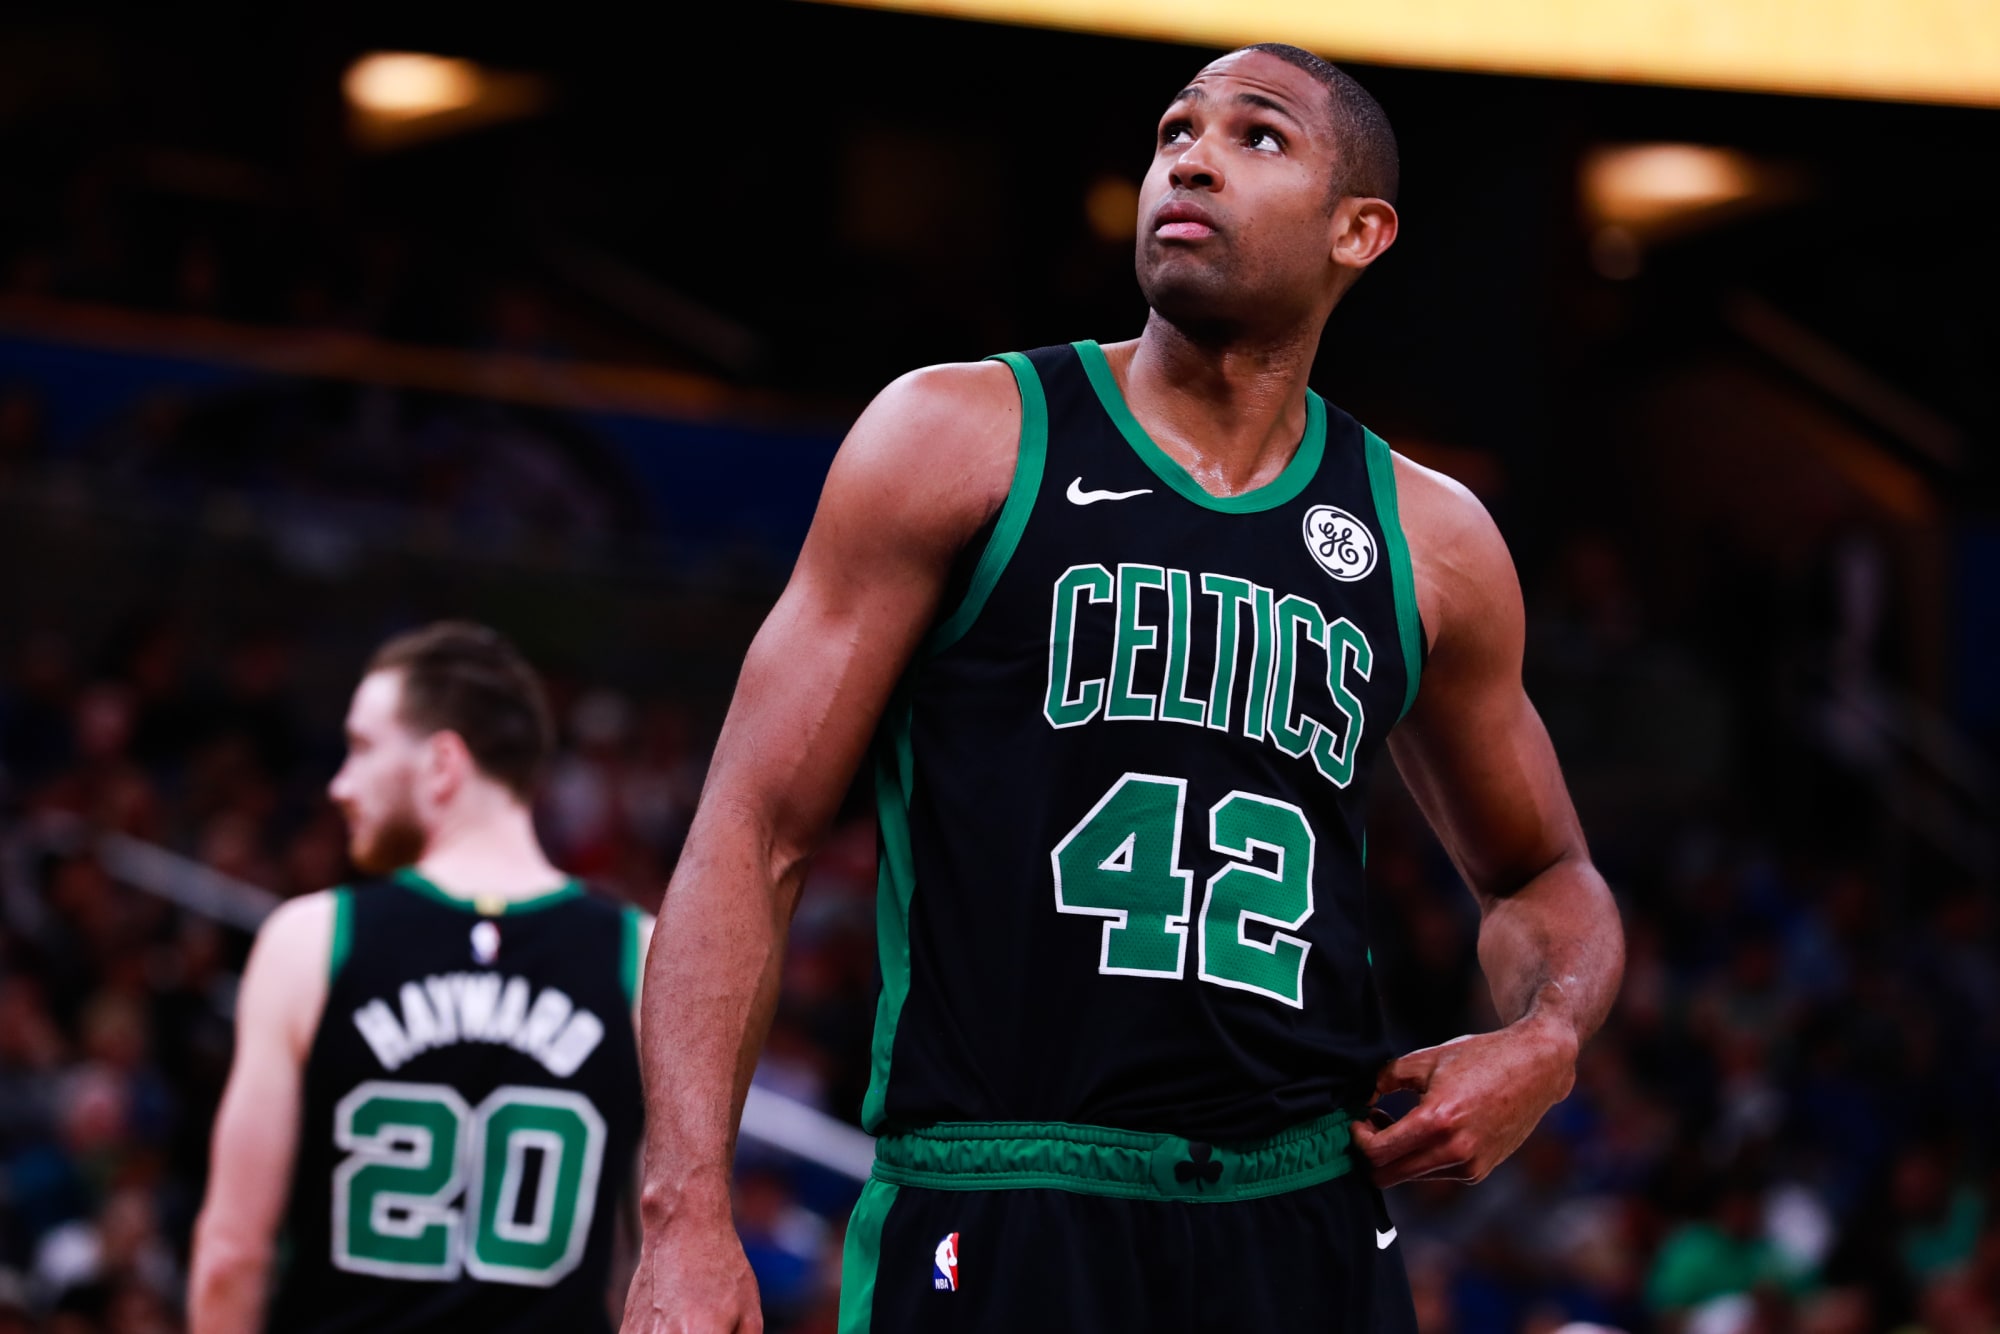 How Al Horford's trade from OKC Thunder shaped Celtics' NBA Finals run